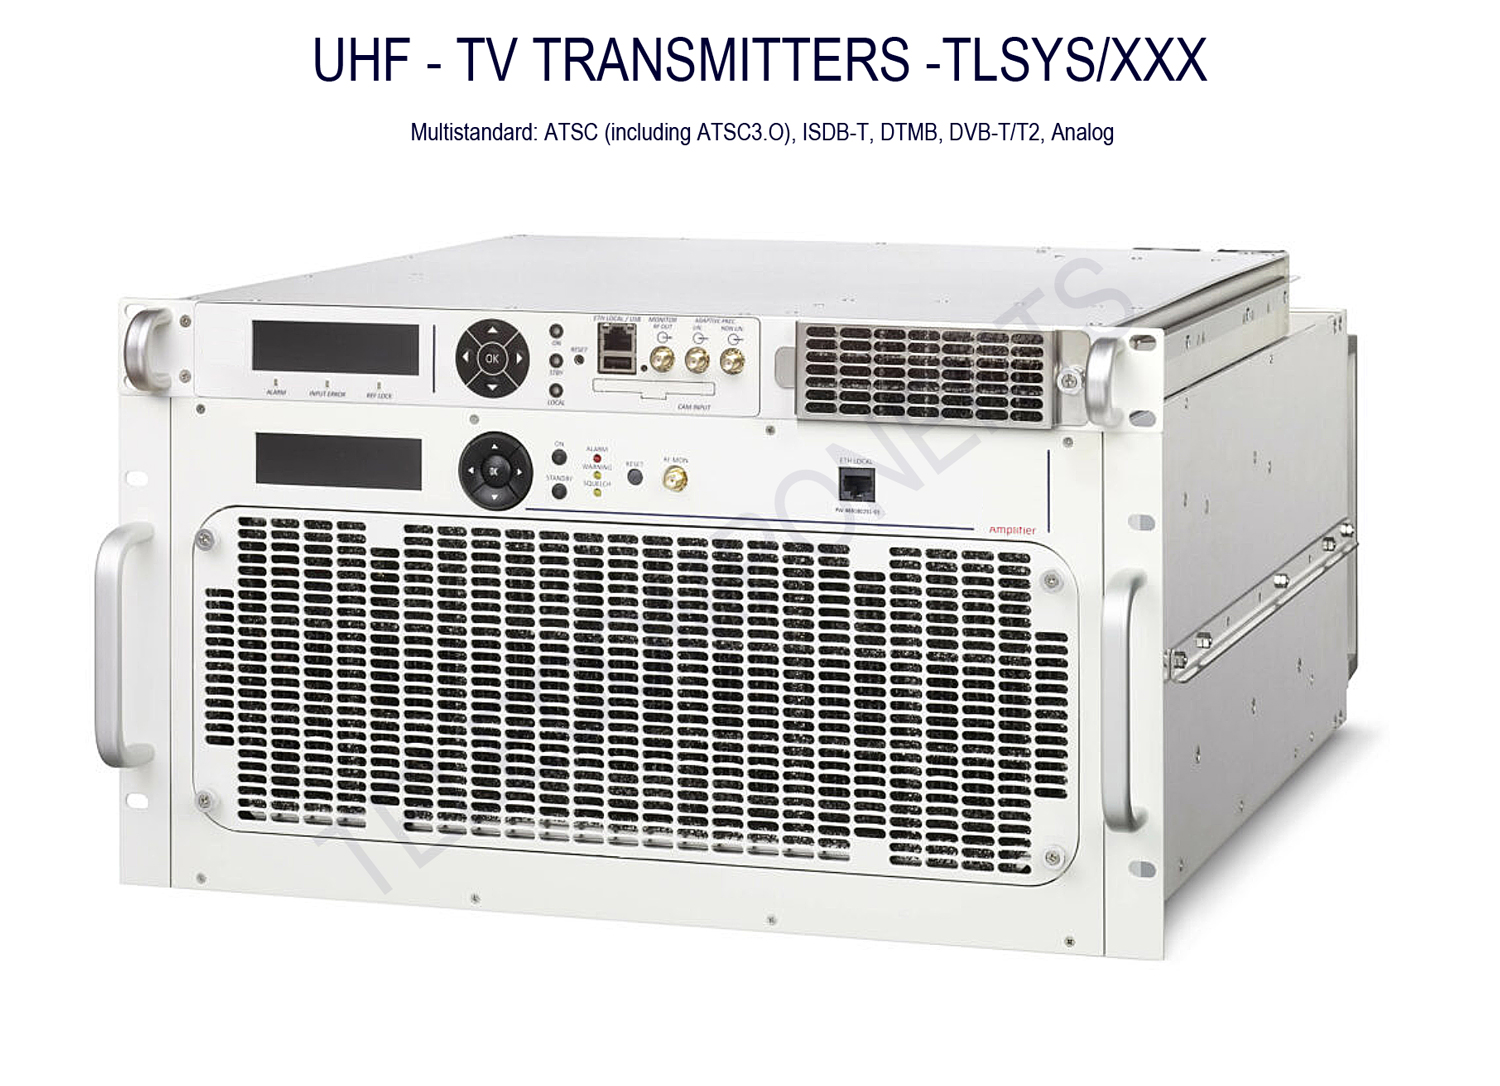 UHF TV transmitter TLSYS/1100 - 1.1Kw watt rms -NEW